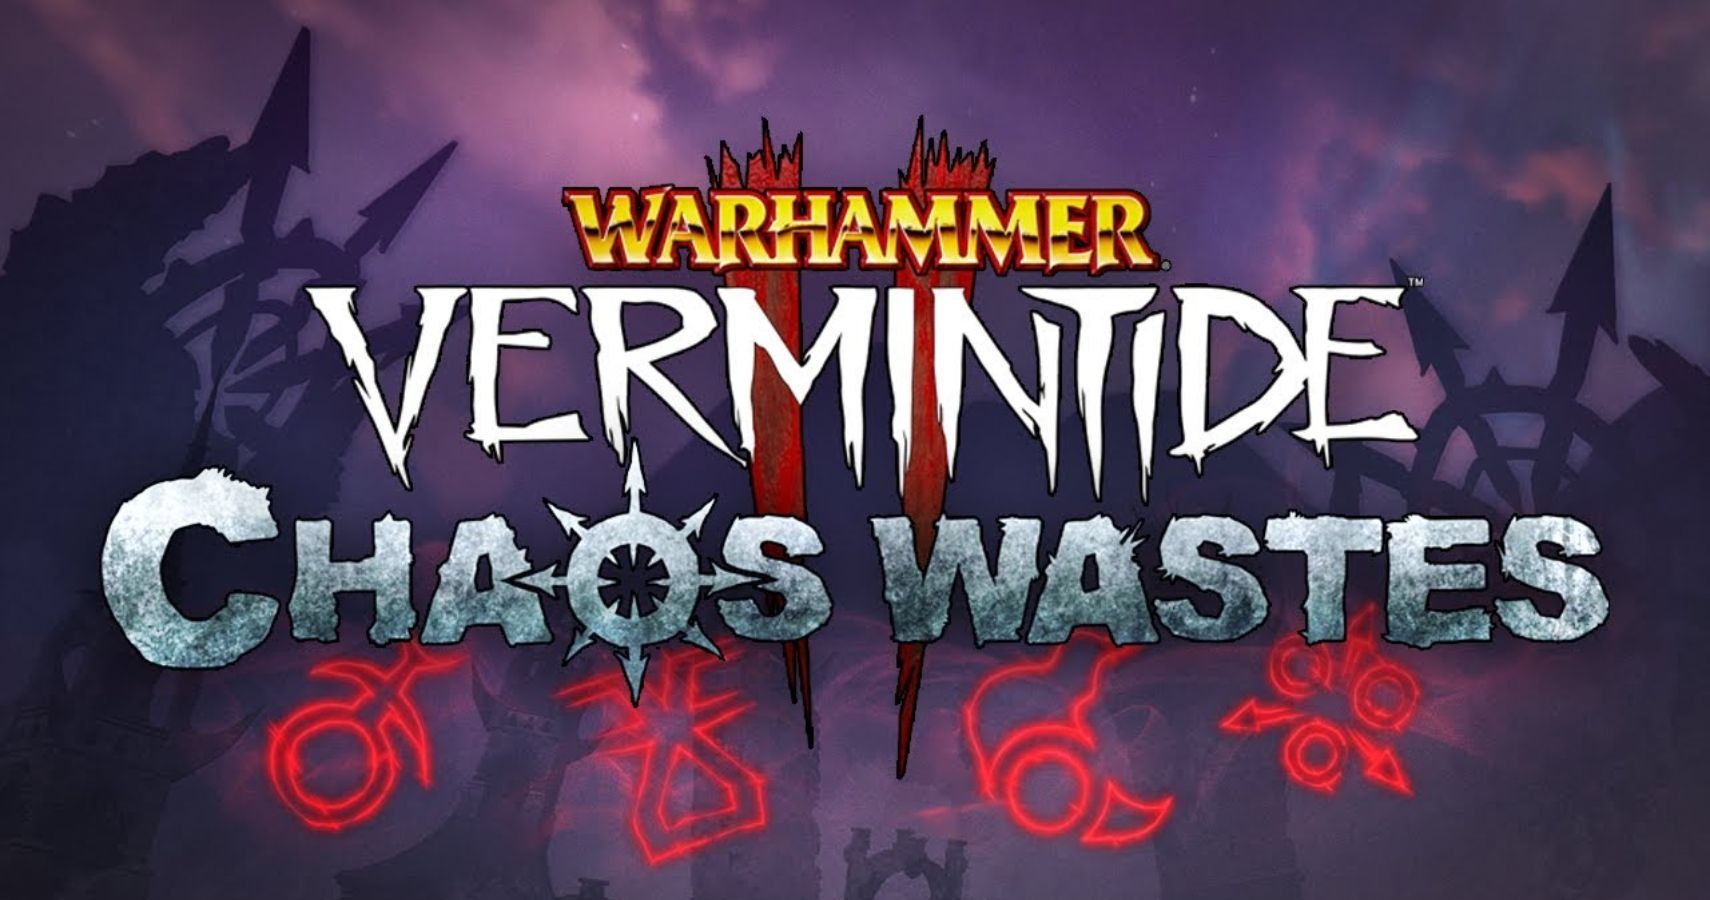 warhammer vermintide 2 chaos wastes